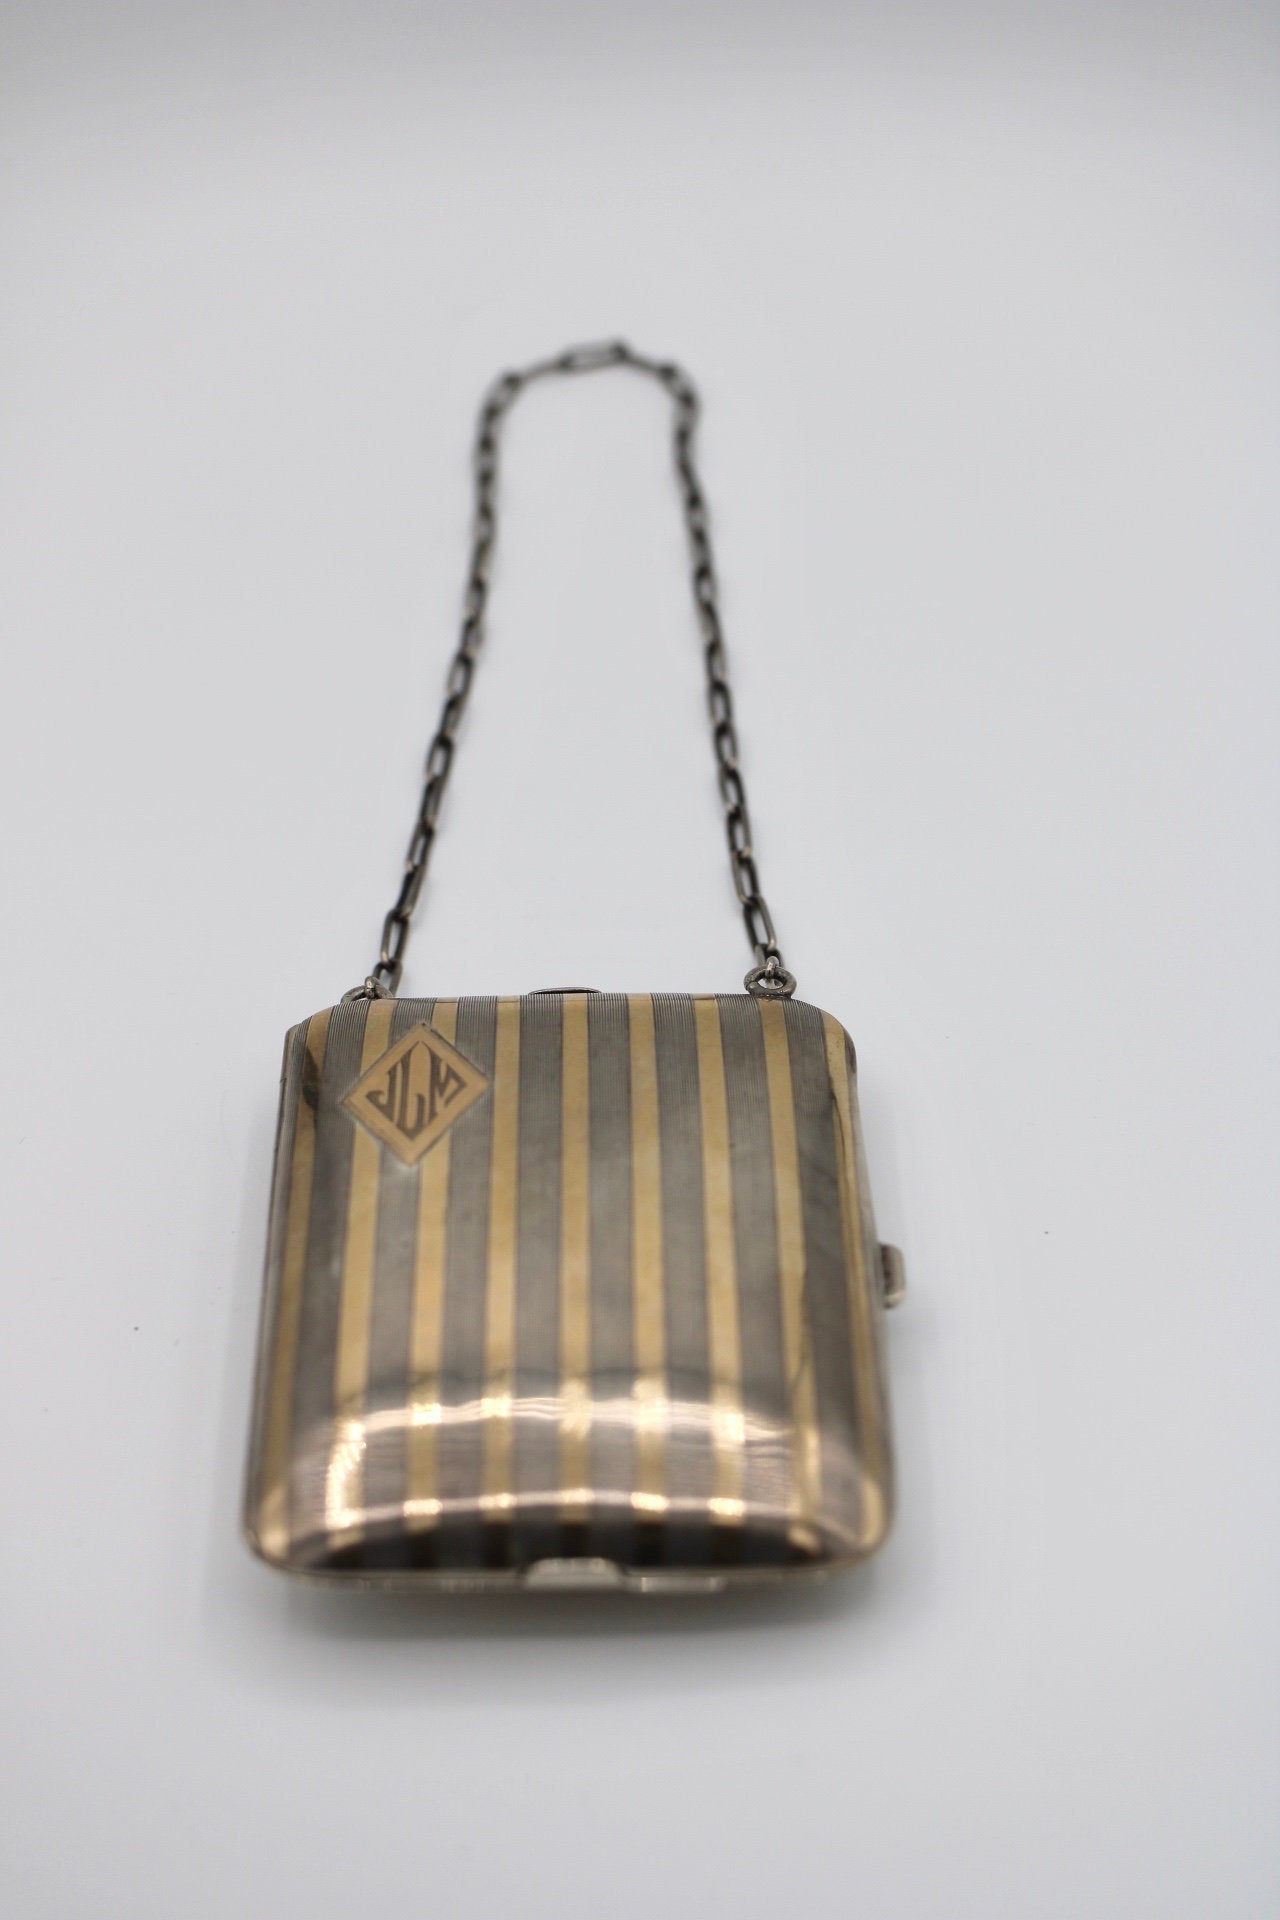 Impressive Authentic Ornate Sterling Silver Clutch Handbag Purse 422 Grams  | eBay